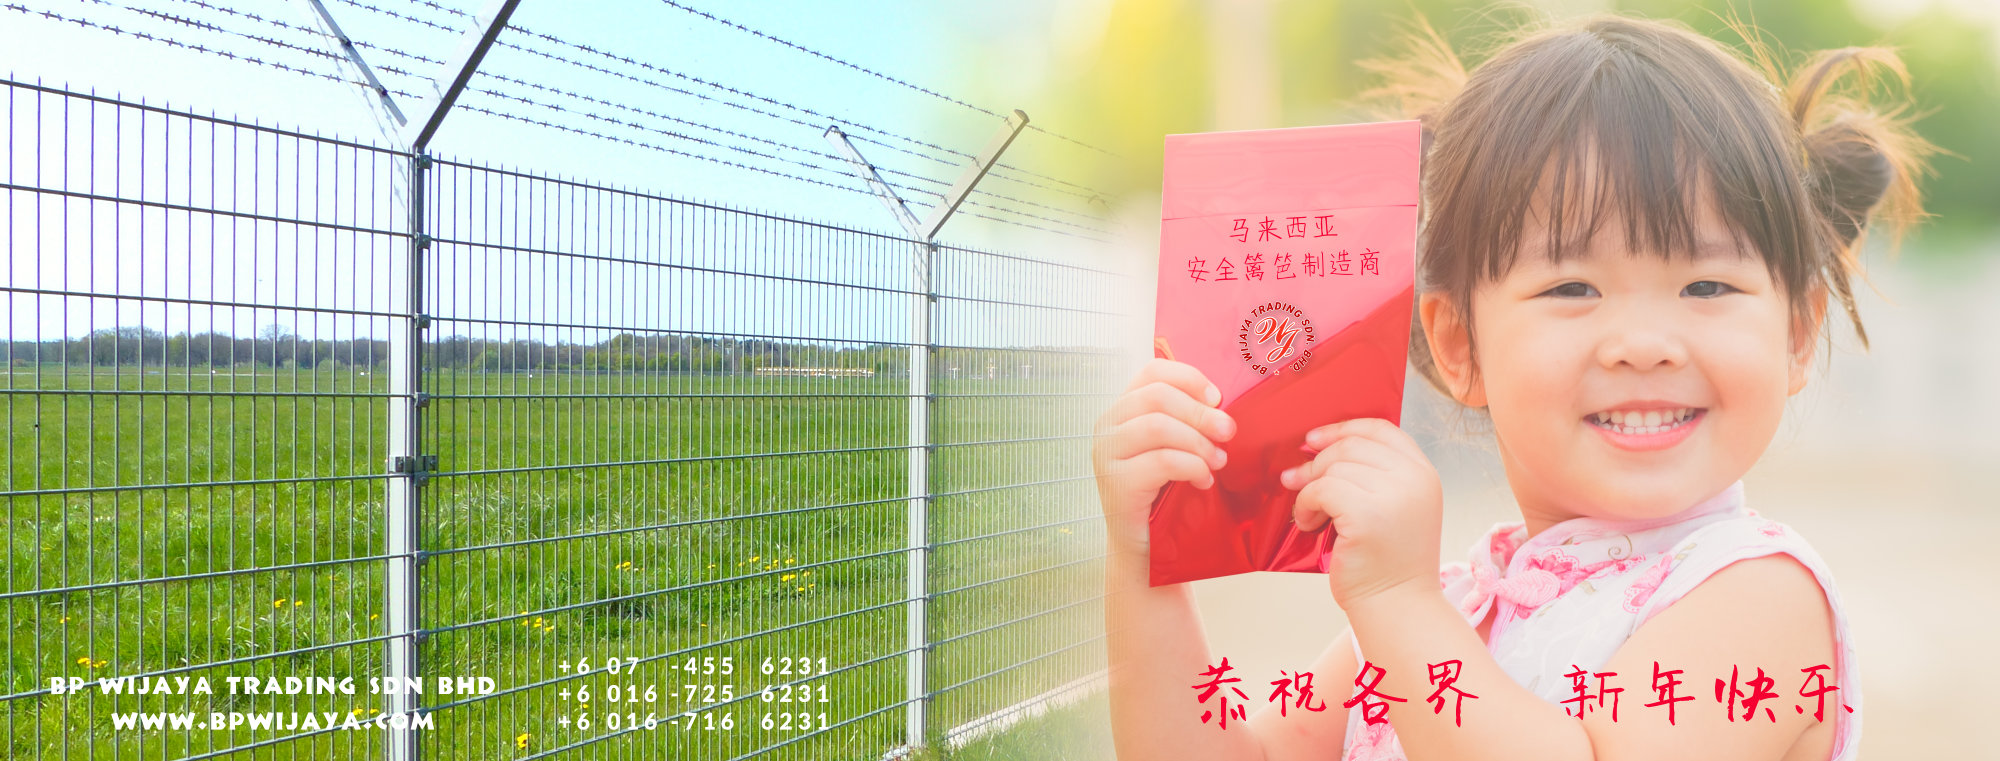 鼠年快乐 农历新年 2020 马来西亚安全篱笆制造商 Chinese New Year 2020 Greeting from BP Wijaya Security Fence Manufacturer Malaysia A01